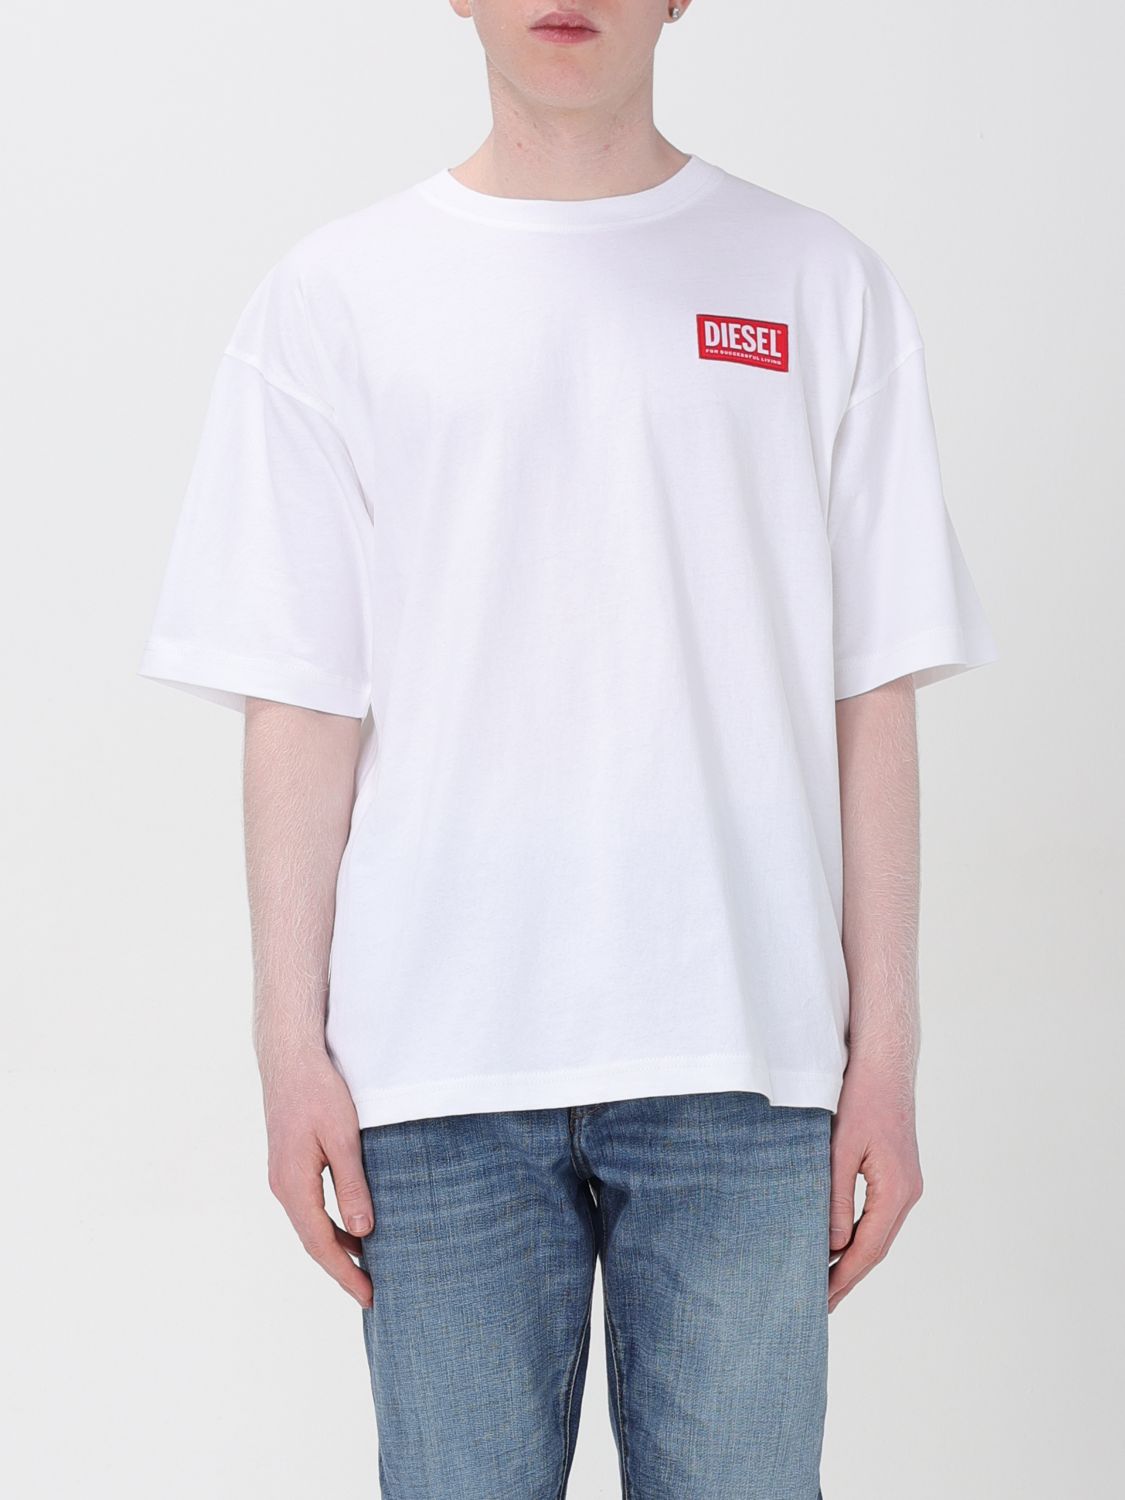 Diesel T-Shirt DIESEL Men colour White